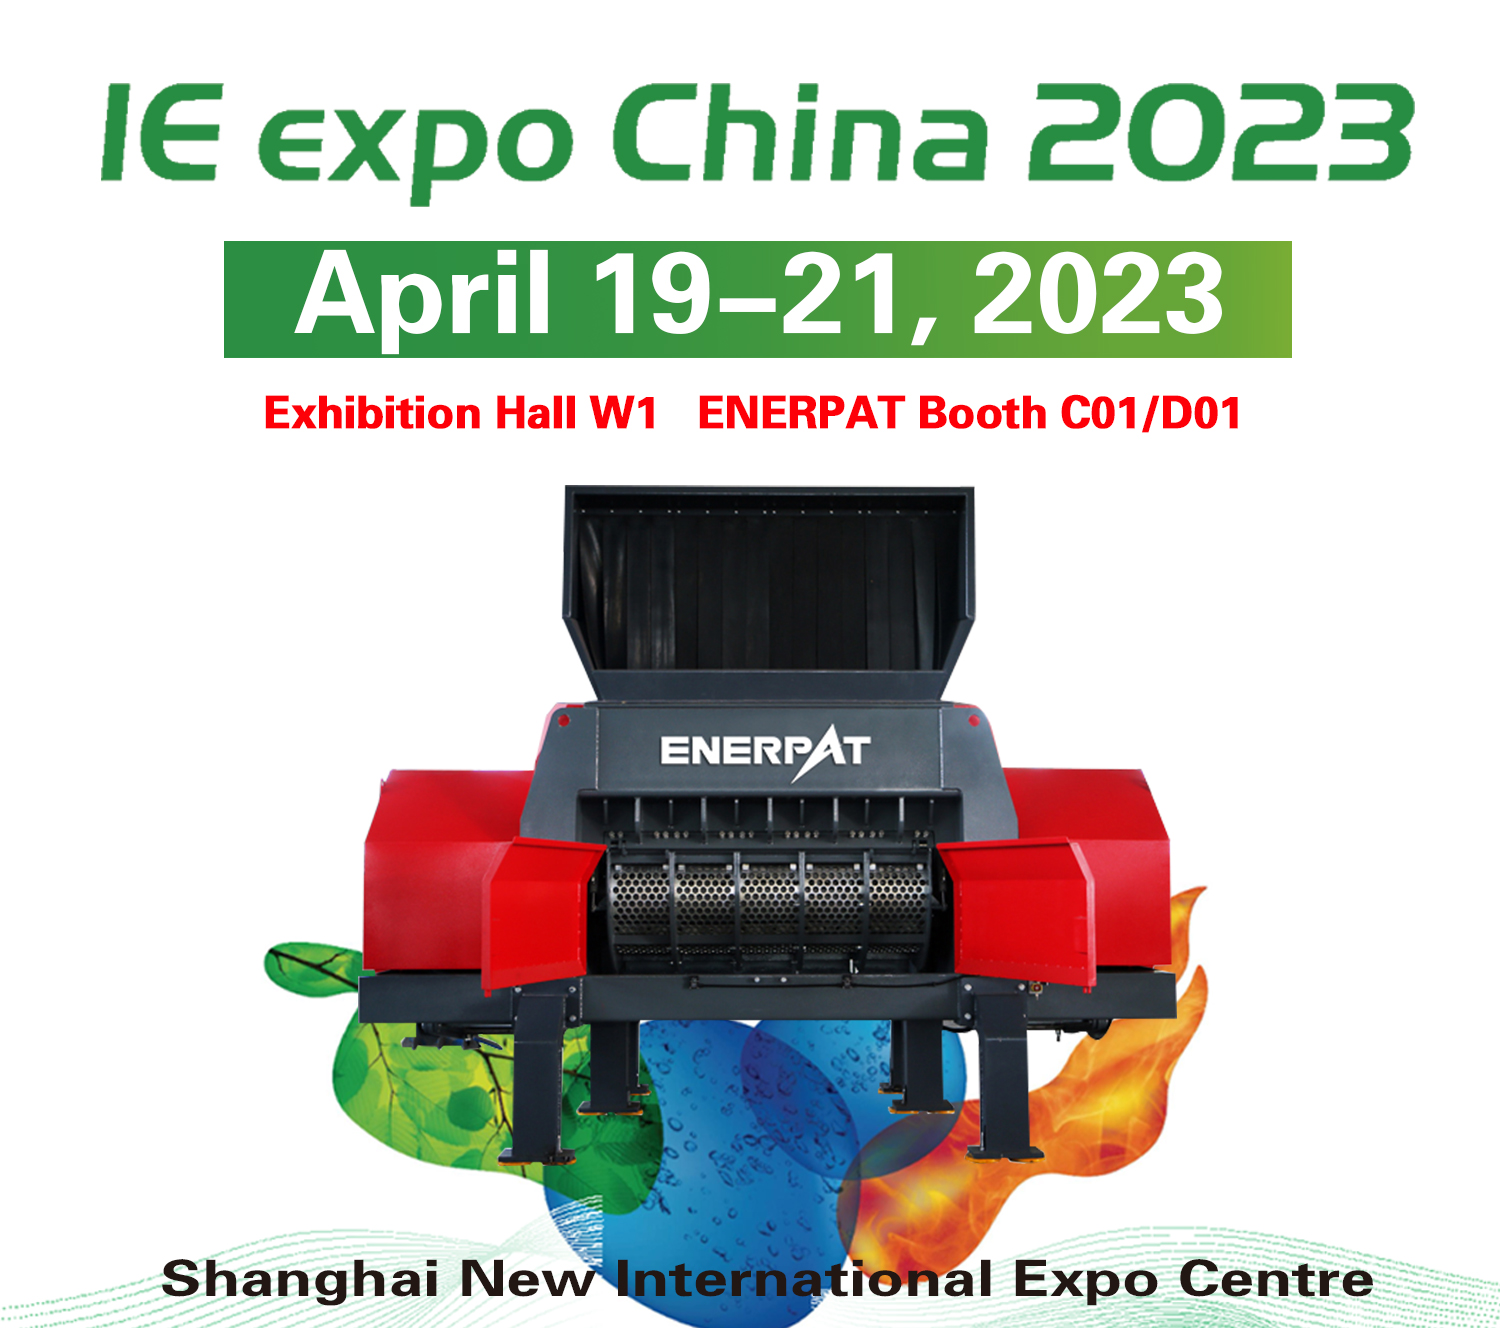 ENERPAT 2023 IE EXPO CHINA in Shanghai